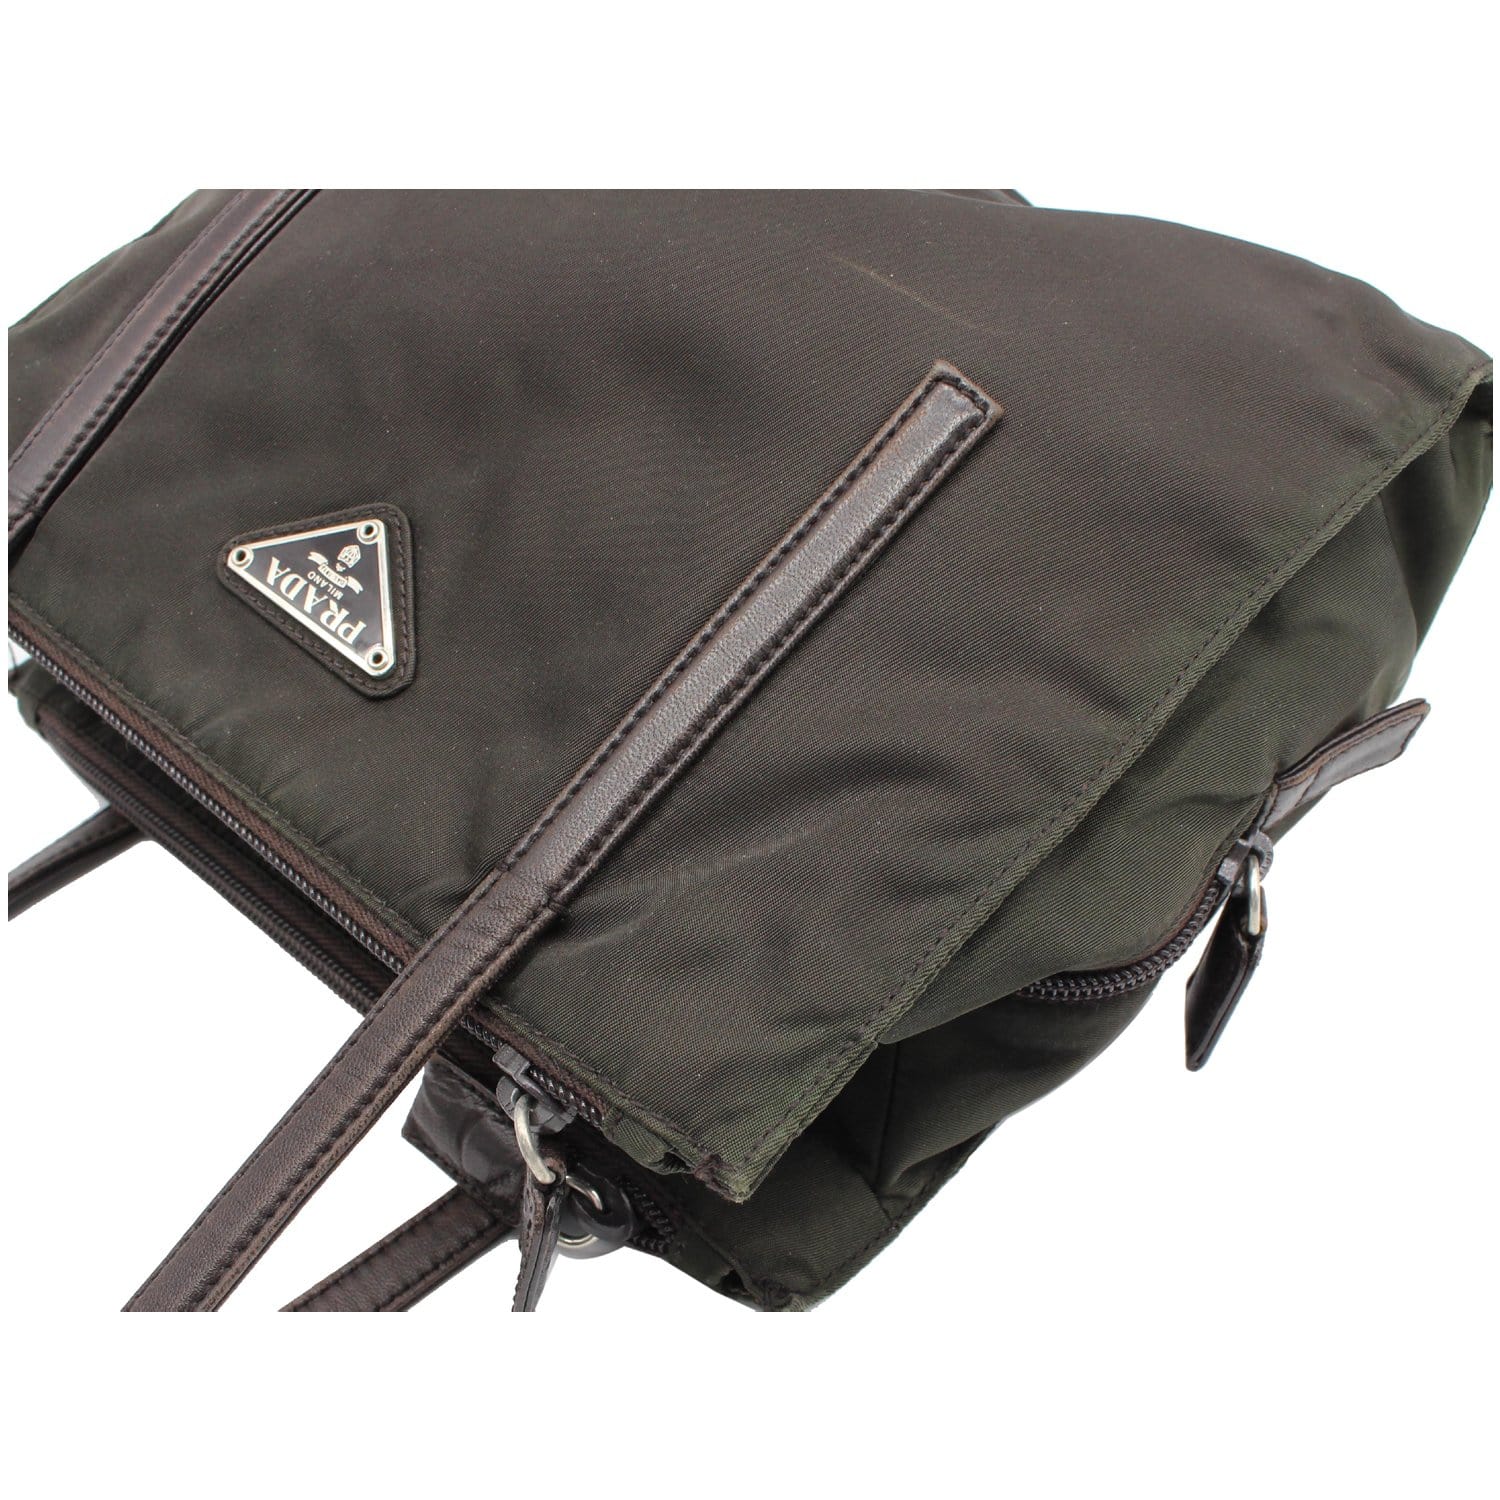 Prada Chain Tote Dark Green Nylon Shoulder Bag 